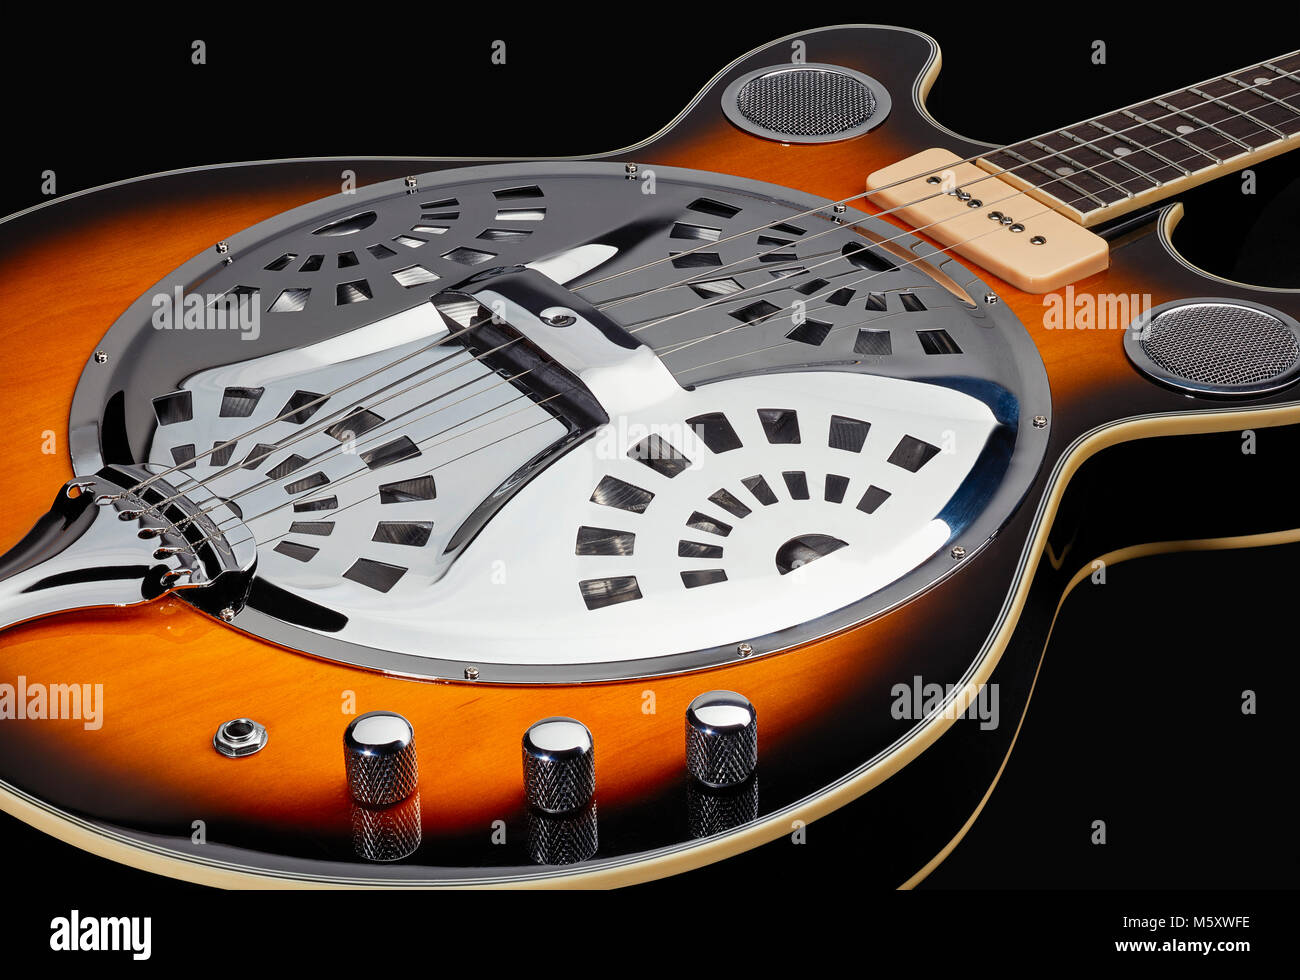 Eastwood Delta 4 Tenor Resonator Gitarre, Pick ups und Kontrollen Stockfoto